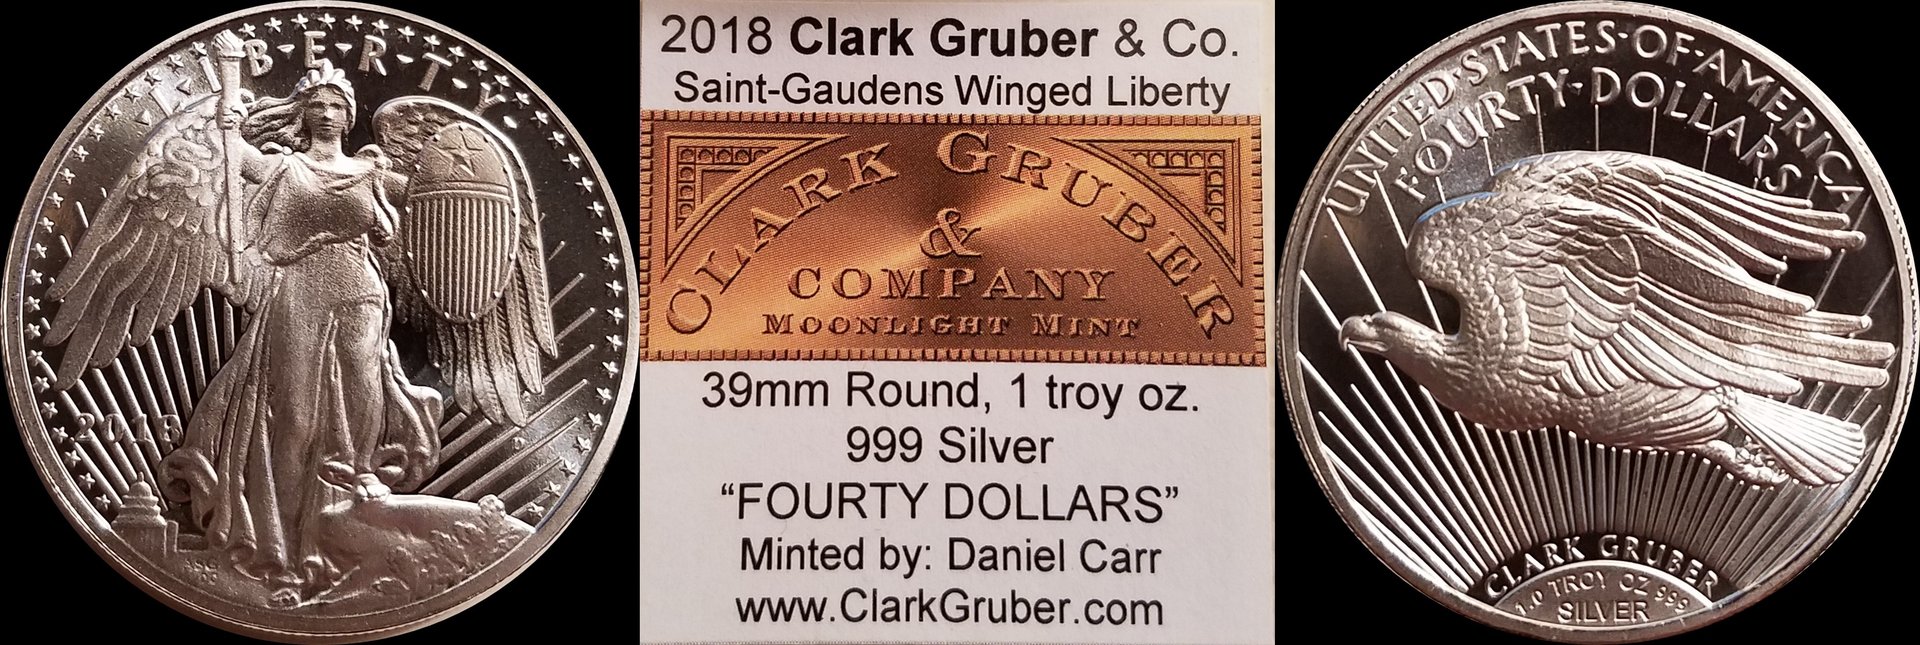 2018 Clark Gruber  Winged Saint-Gaudens 1-horz.jpg